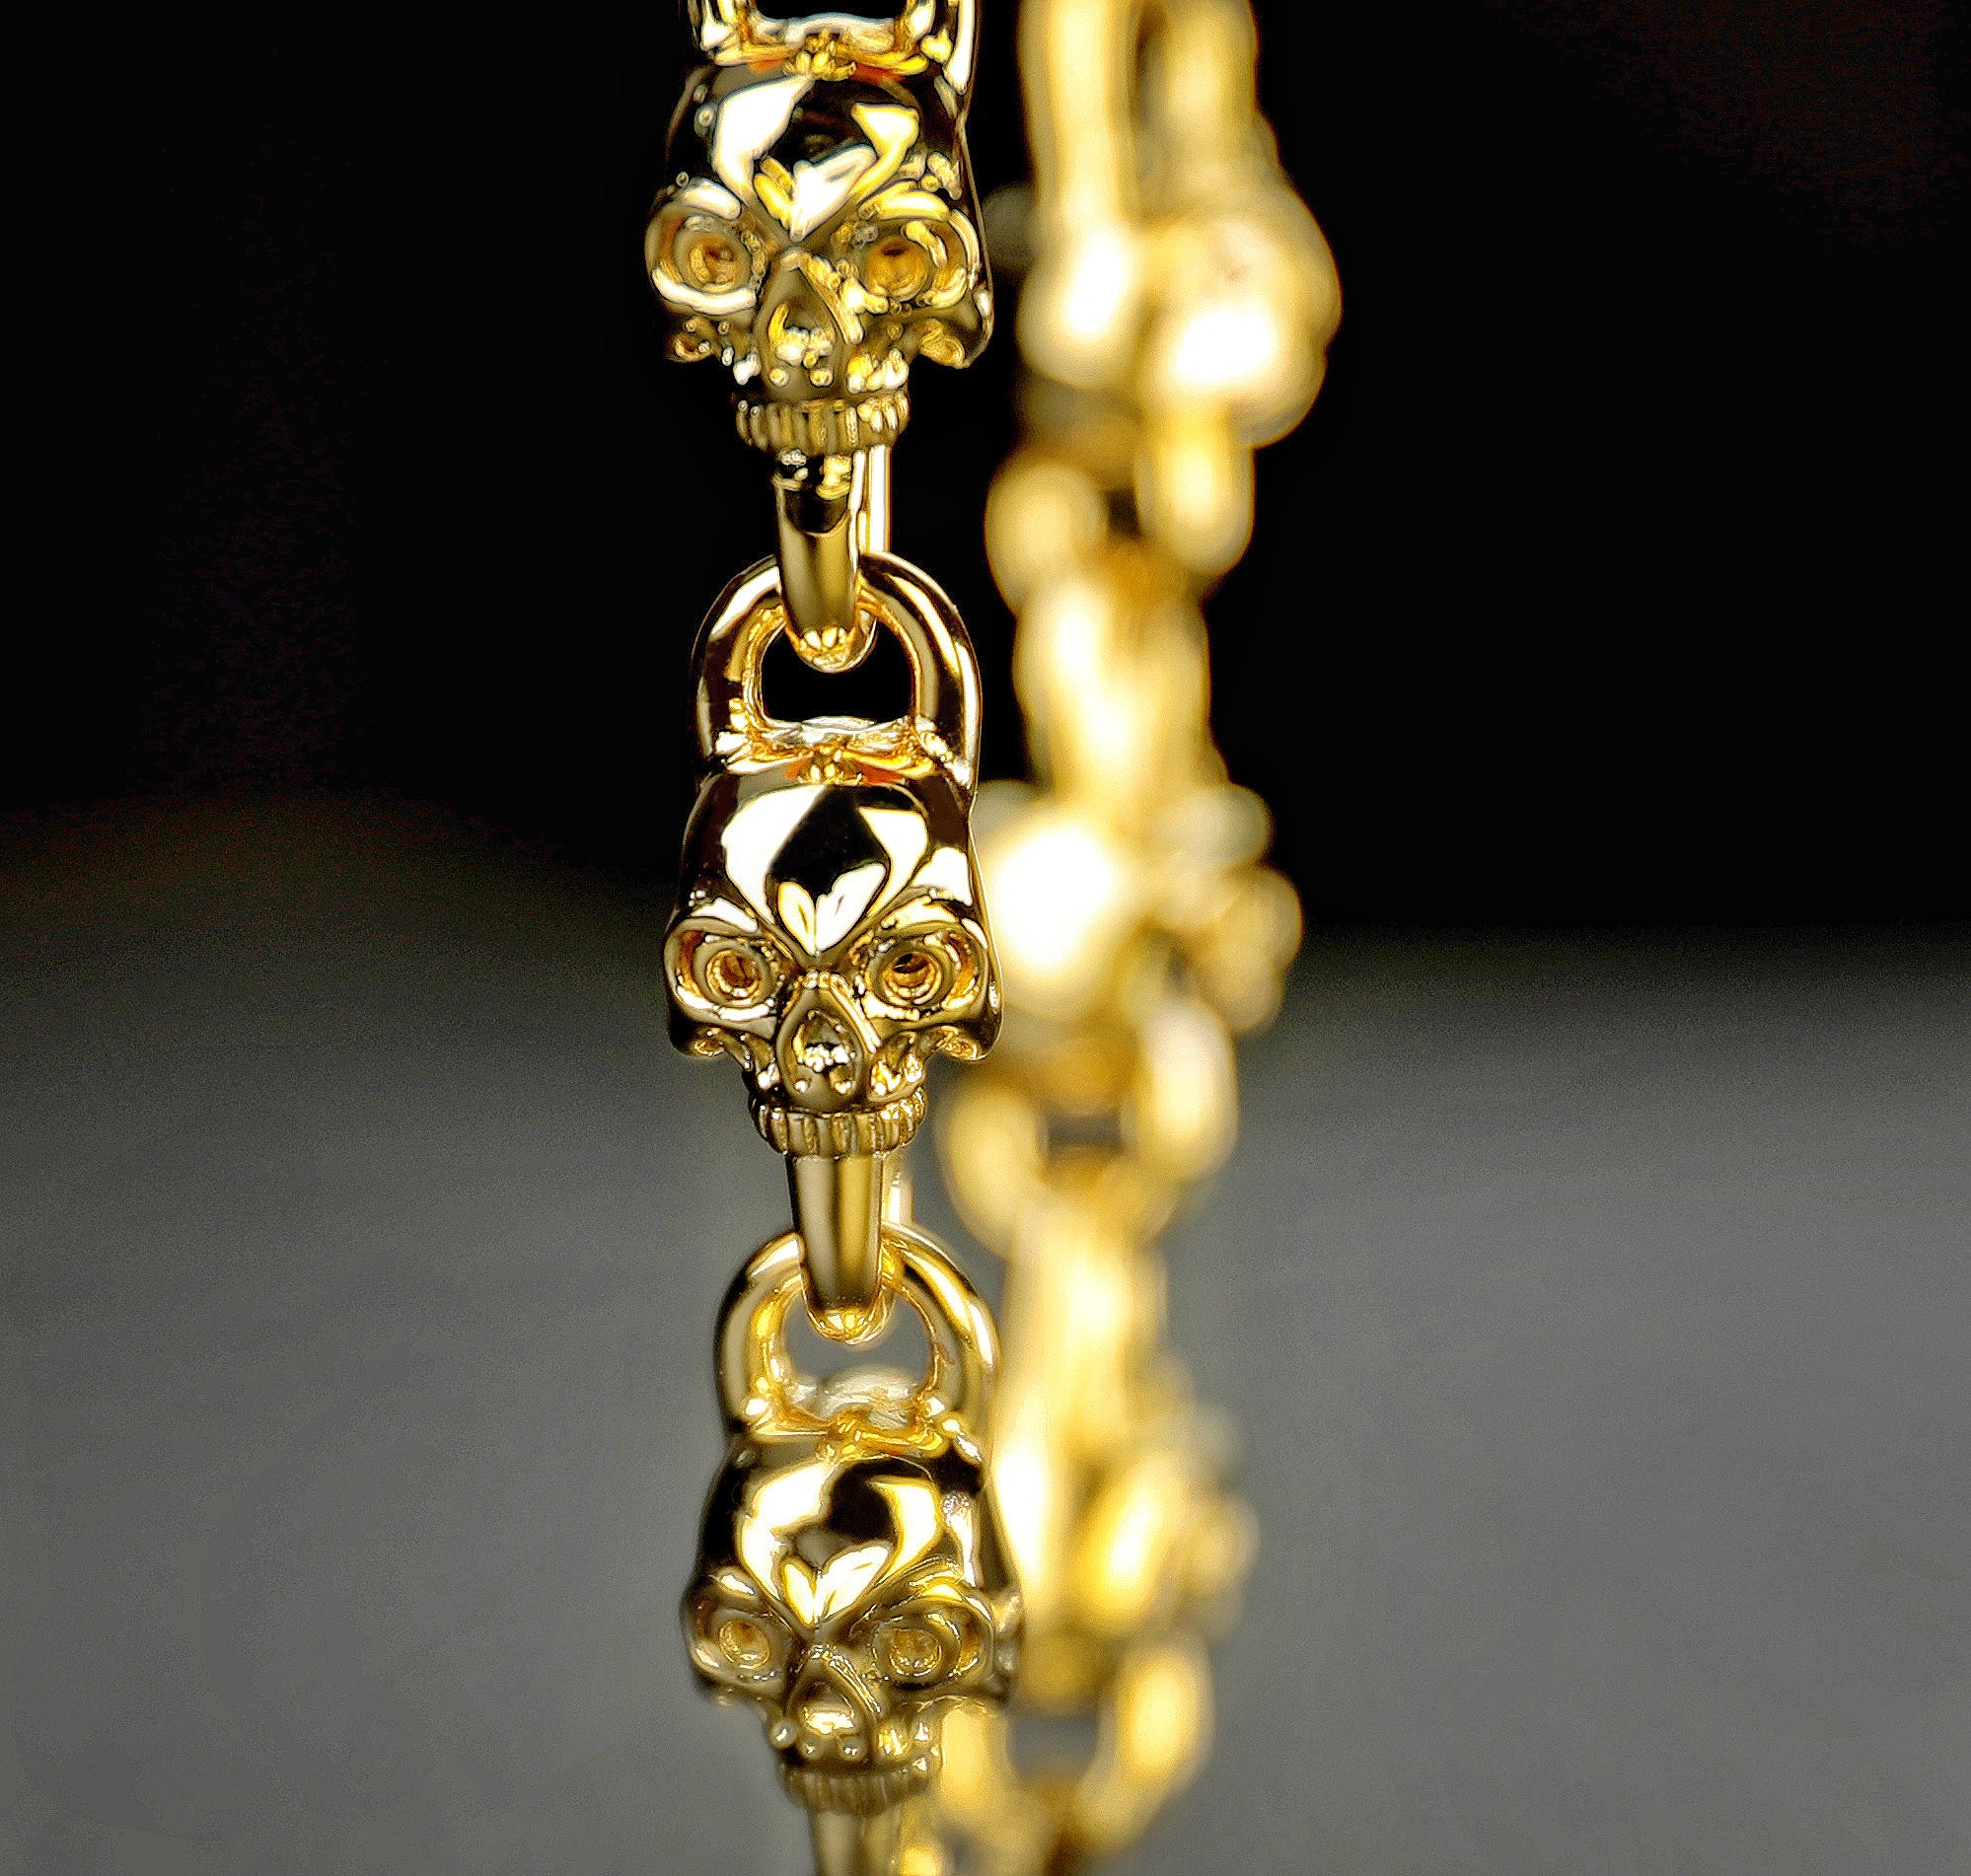 Skull Sterling Silver/9k/14k/18k Necklace Chain (Item No. GN0006）